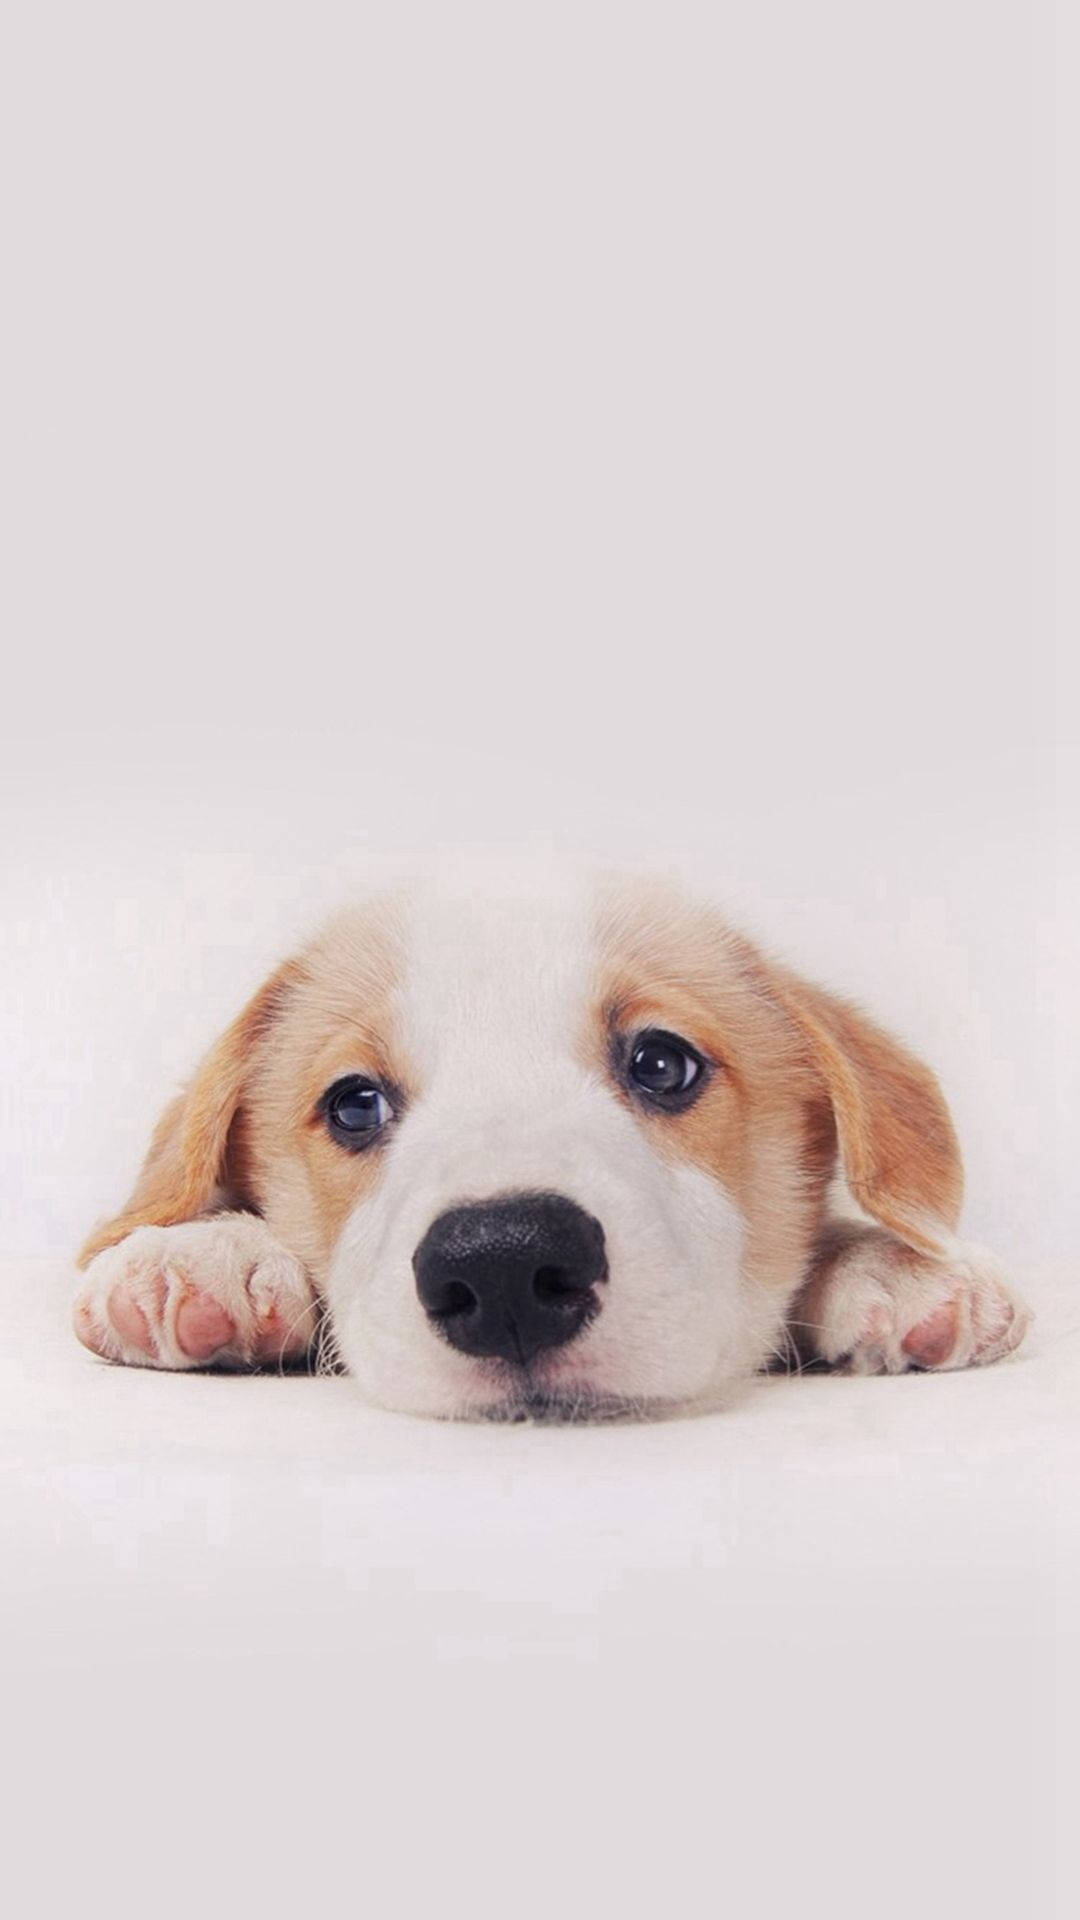 Cute Puppy Desktop Wallpaper 53 pictures